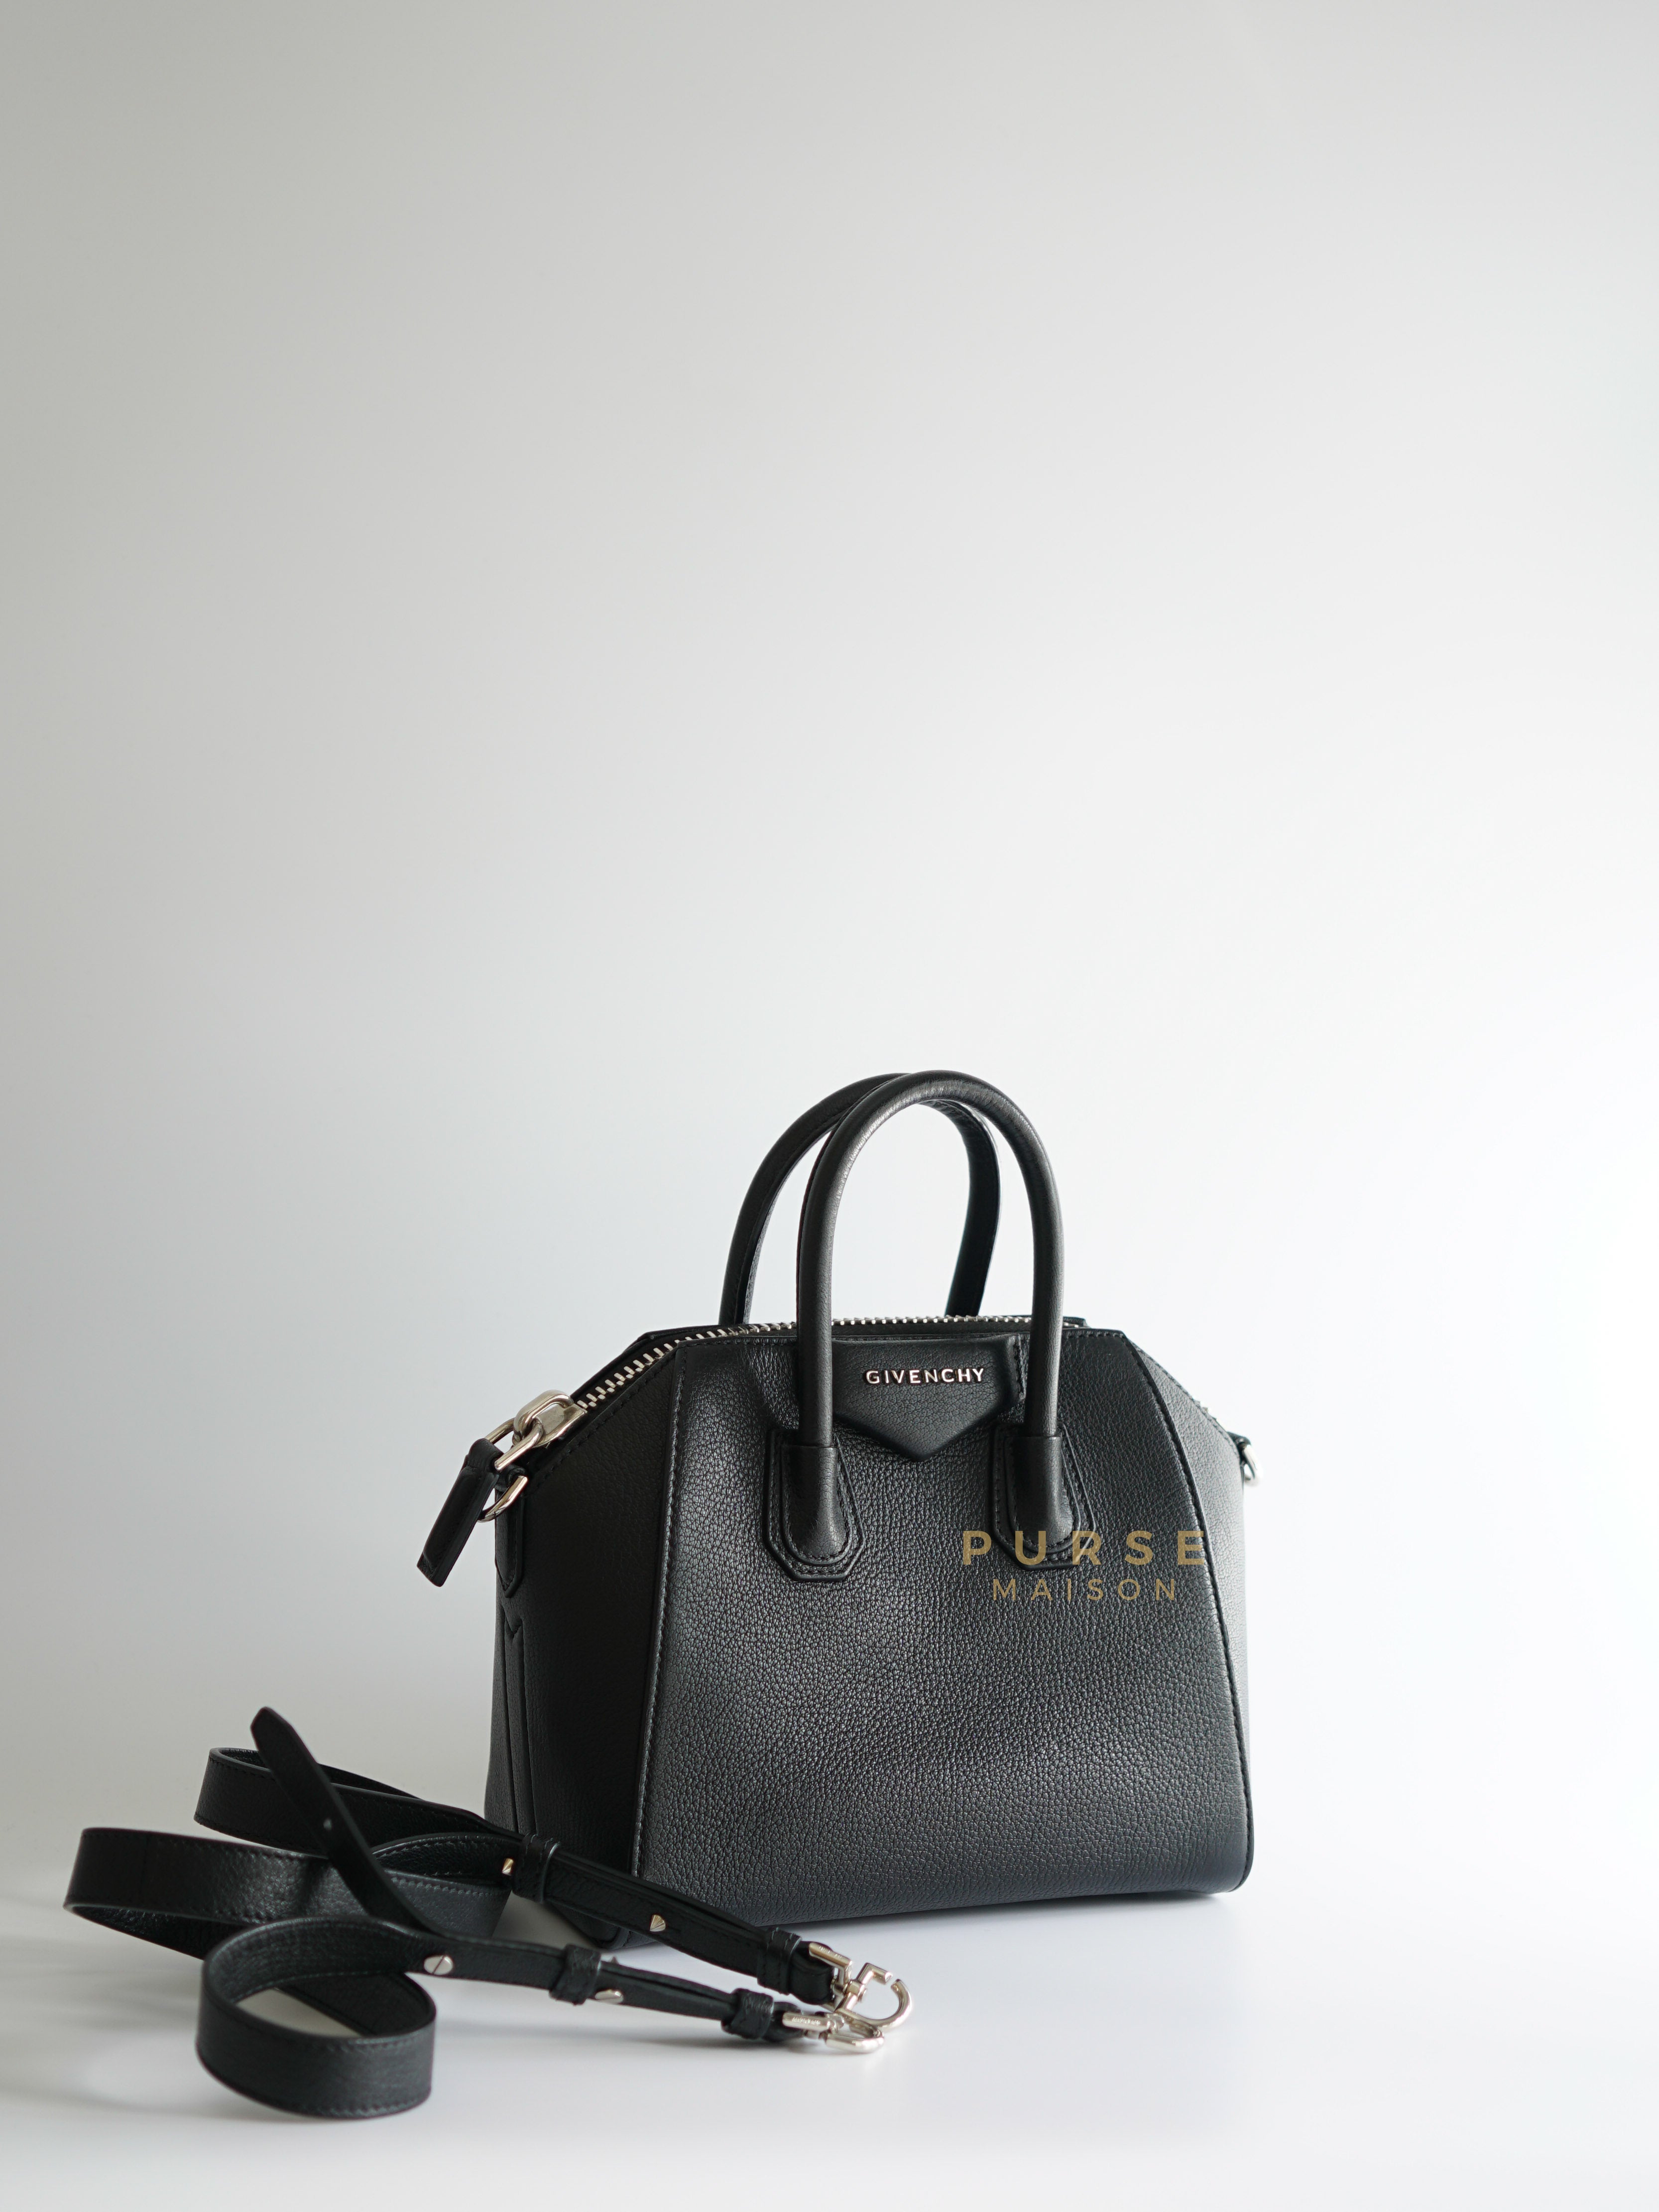 Antigona Mini Black Goatskin Canvas Bag | Purse Maison Luxury Bags Shop